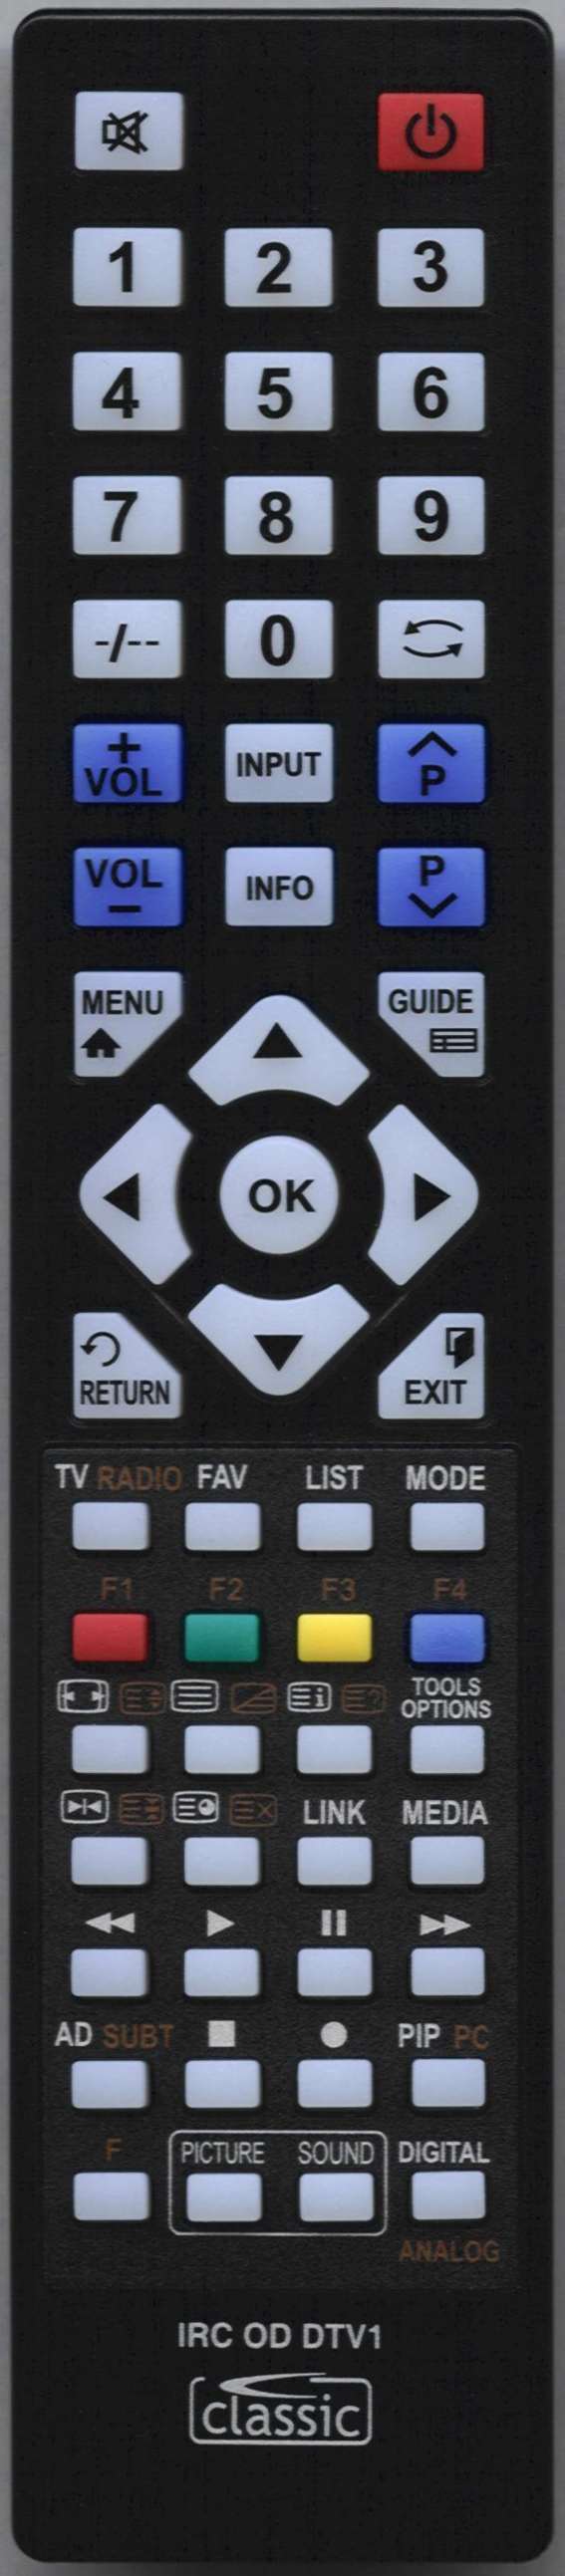 SONY KDL32S5500 Remote Control Alternative